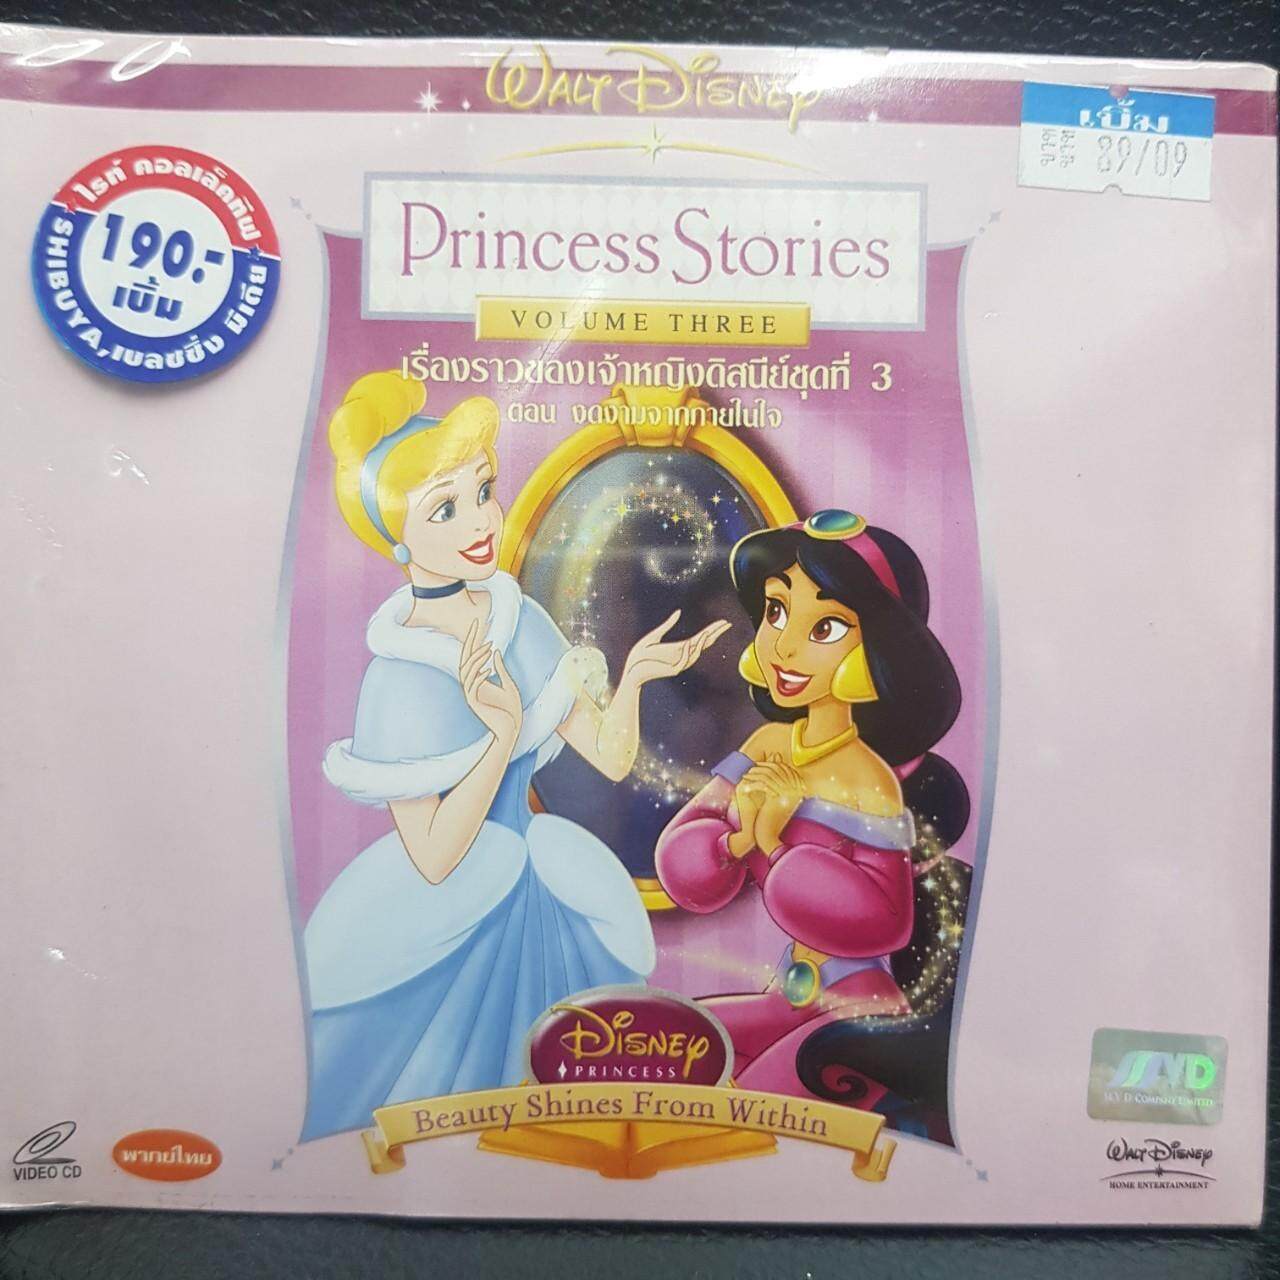 VCDหนัง เรื่องราวของเจ้าหญิงดิสนีย์ชุด3 ตอนงดงามจากภายในใจ Princess Stories 3 ฉบับ พากย์ไทย (MVDVCD179-เรื่องราวของเจ้าหญิงดิสนีย์3PrincessStories3) cartoon การ์ตูน ดิสนีย์ disney MVD หนัง ภาพยนตร์ ดูหนังดีวีโอซีดี วีซีดี VCD มาสเตอร์แท้ STARMART